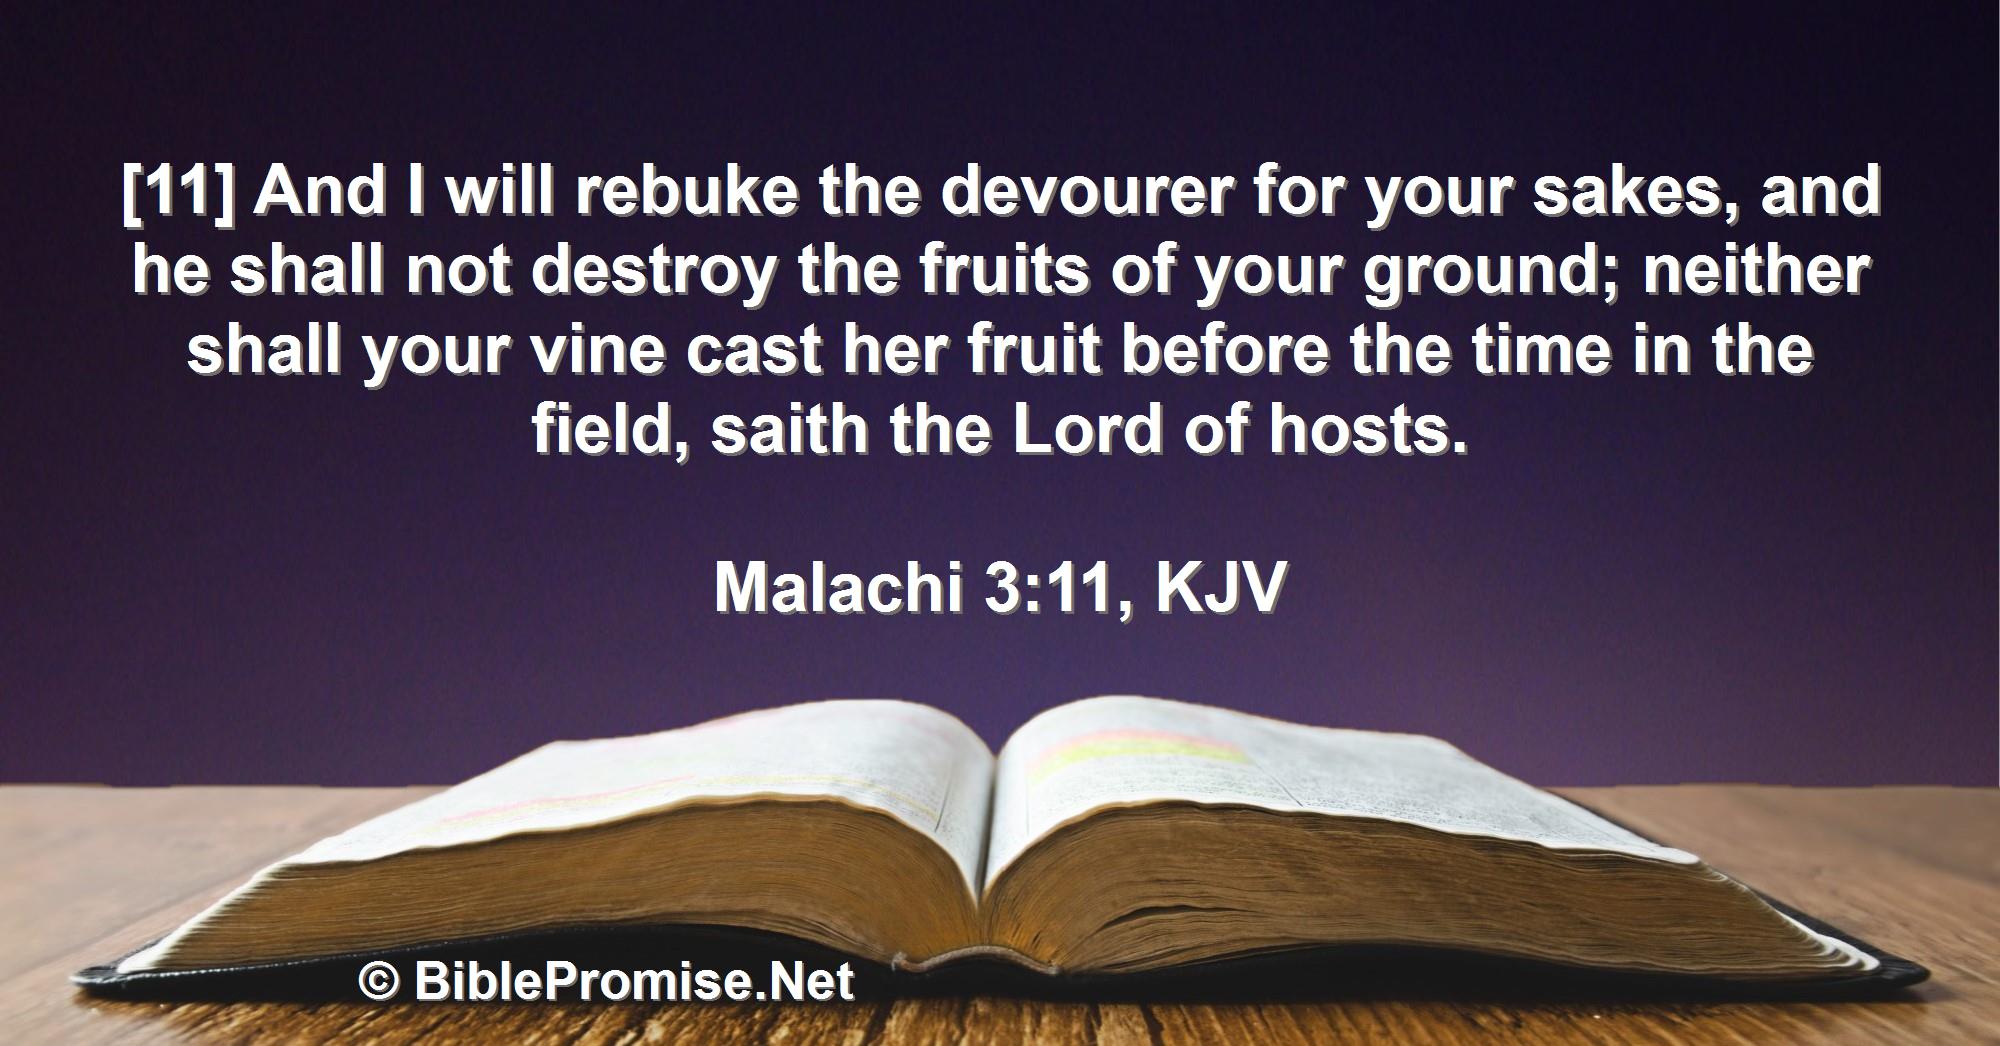 Monday, September 19, 2022 - Malachi 3:11 (KJV) - Bible promise that God will rebuke the devourer for your sakes, so that he will not destroy the fruit of your ground.